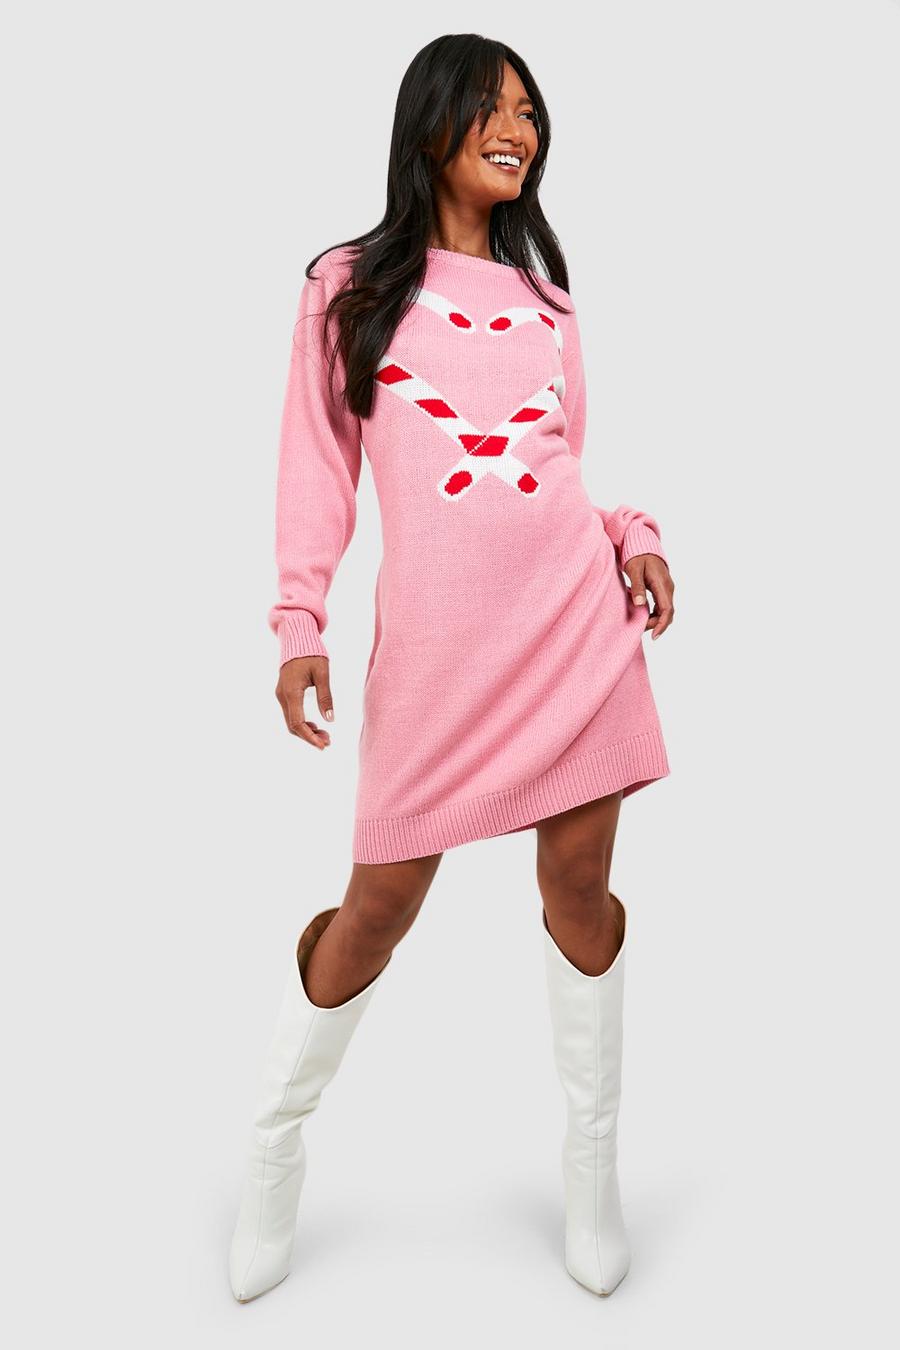 Pink Candy Cane Christmas Jumper Dress